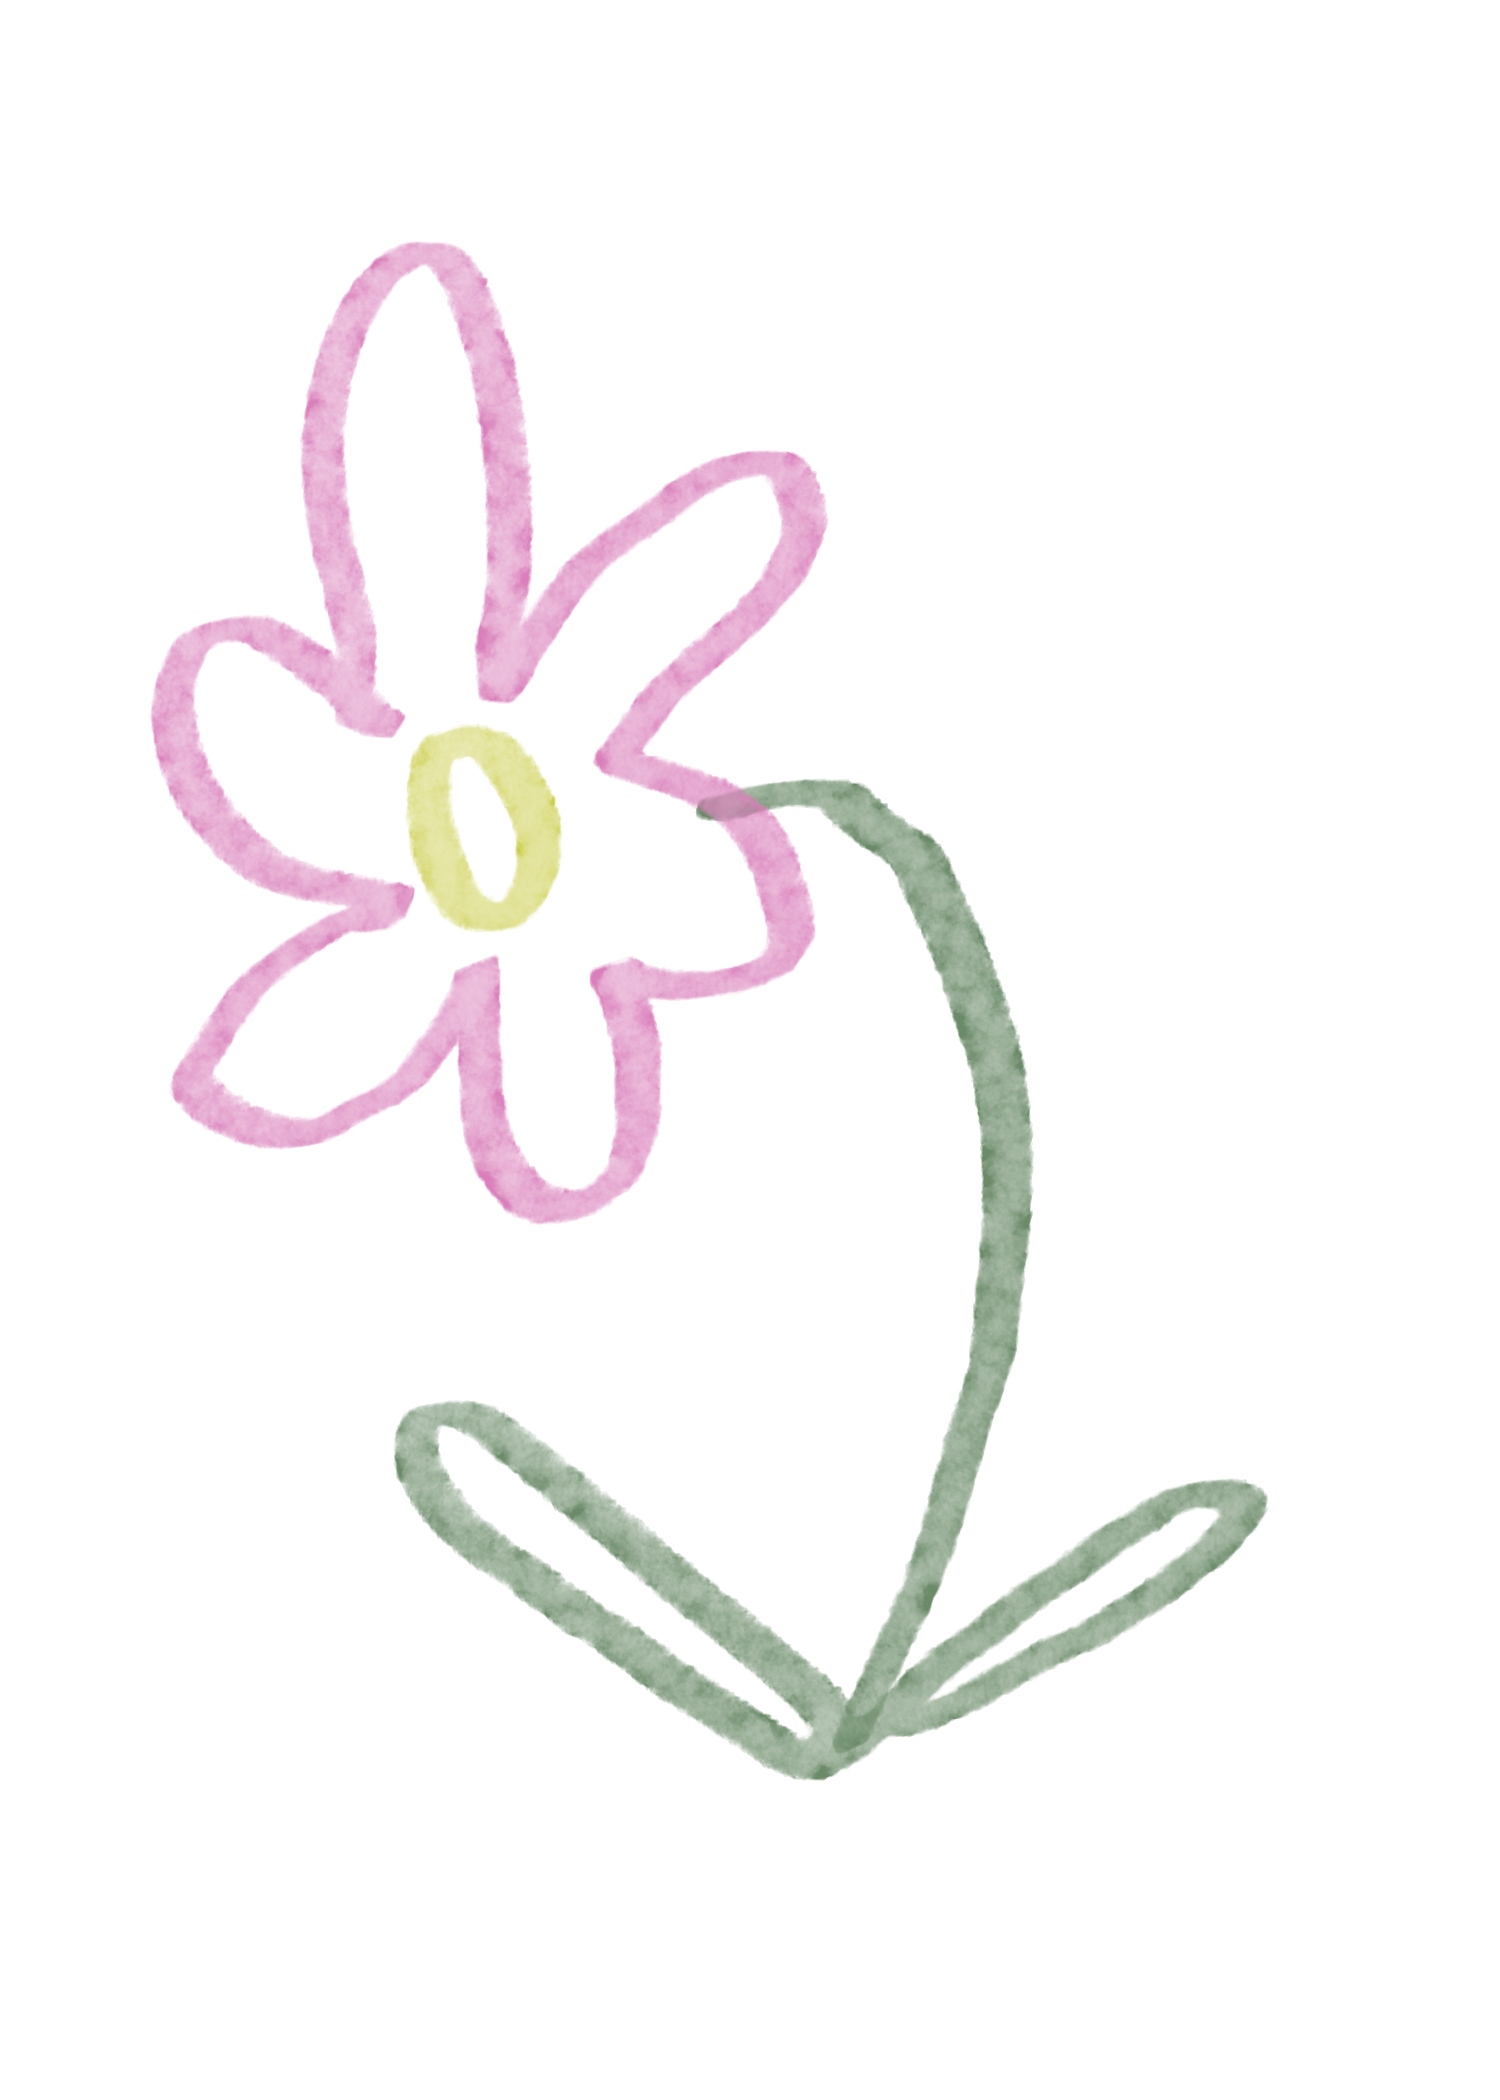 doodle of a flower